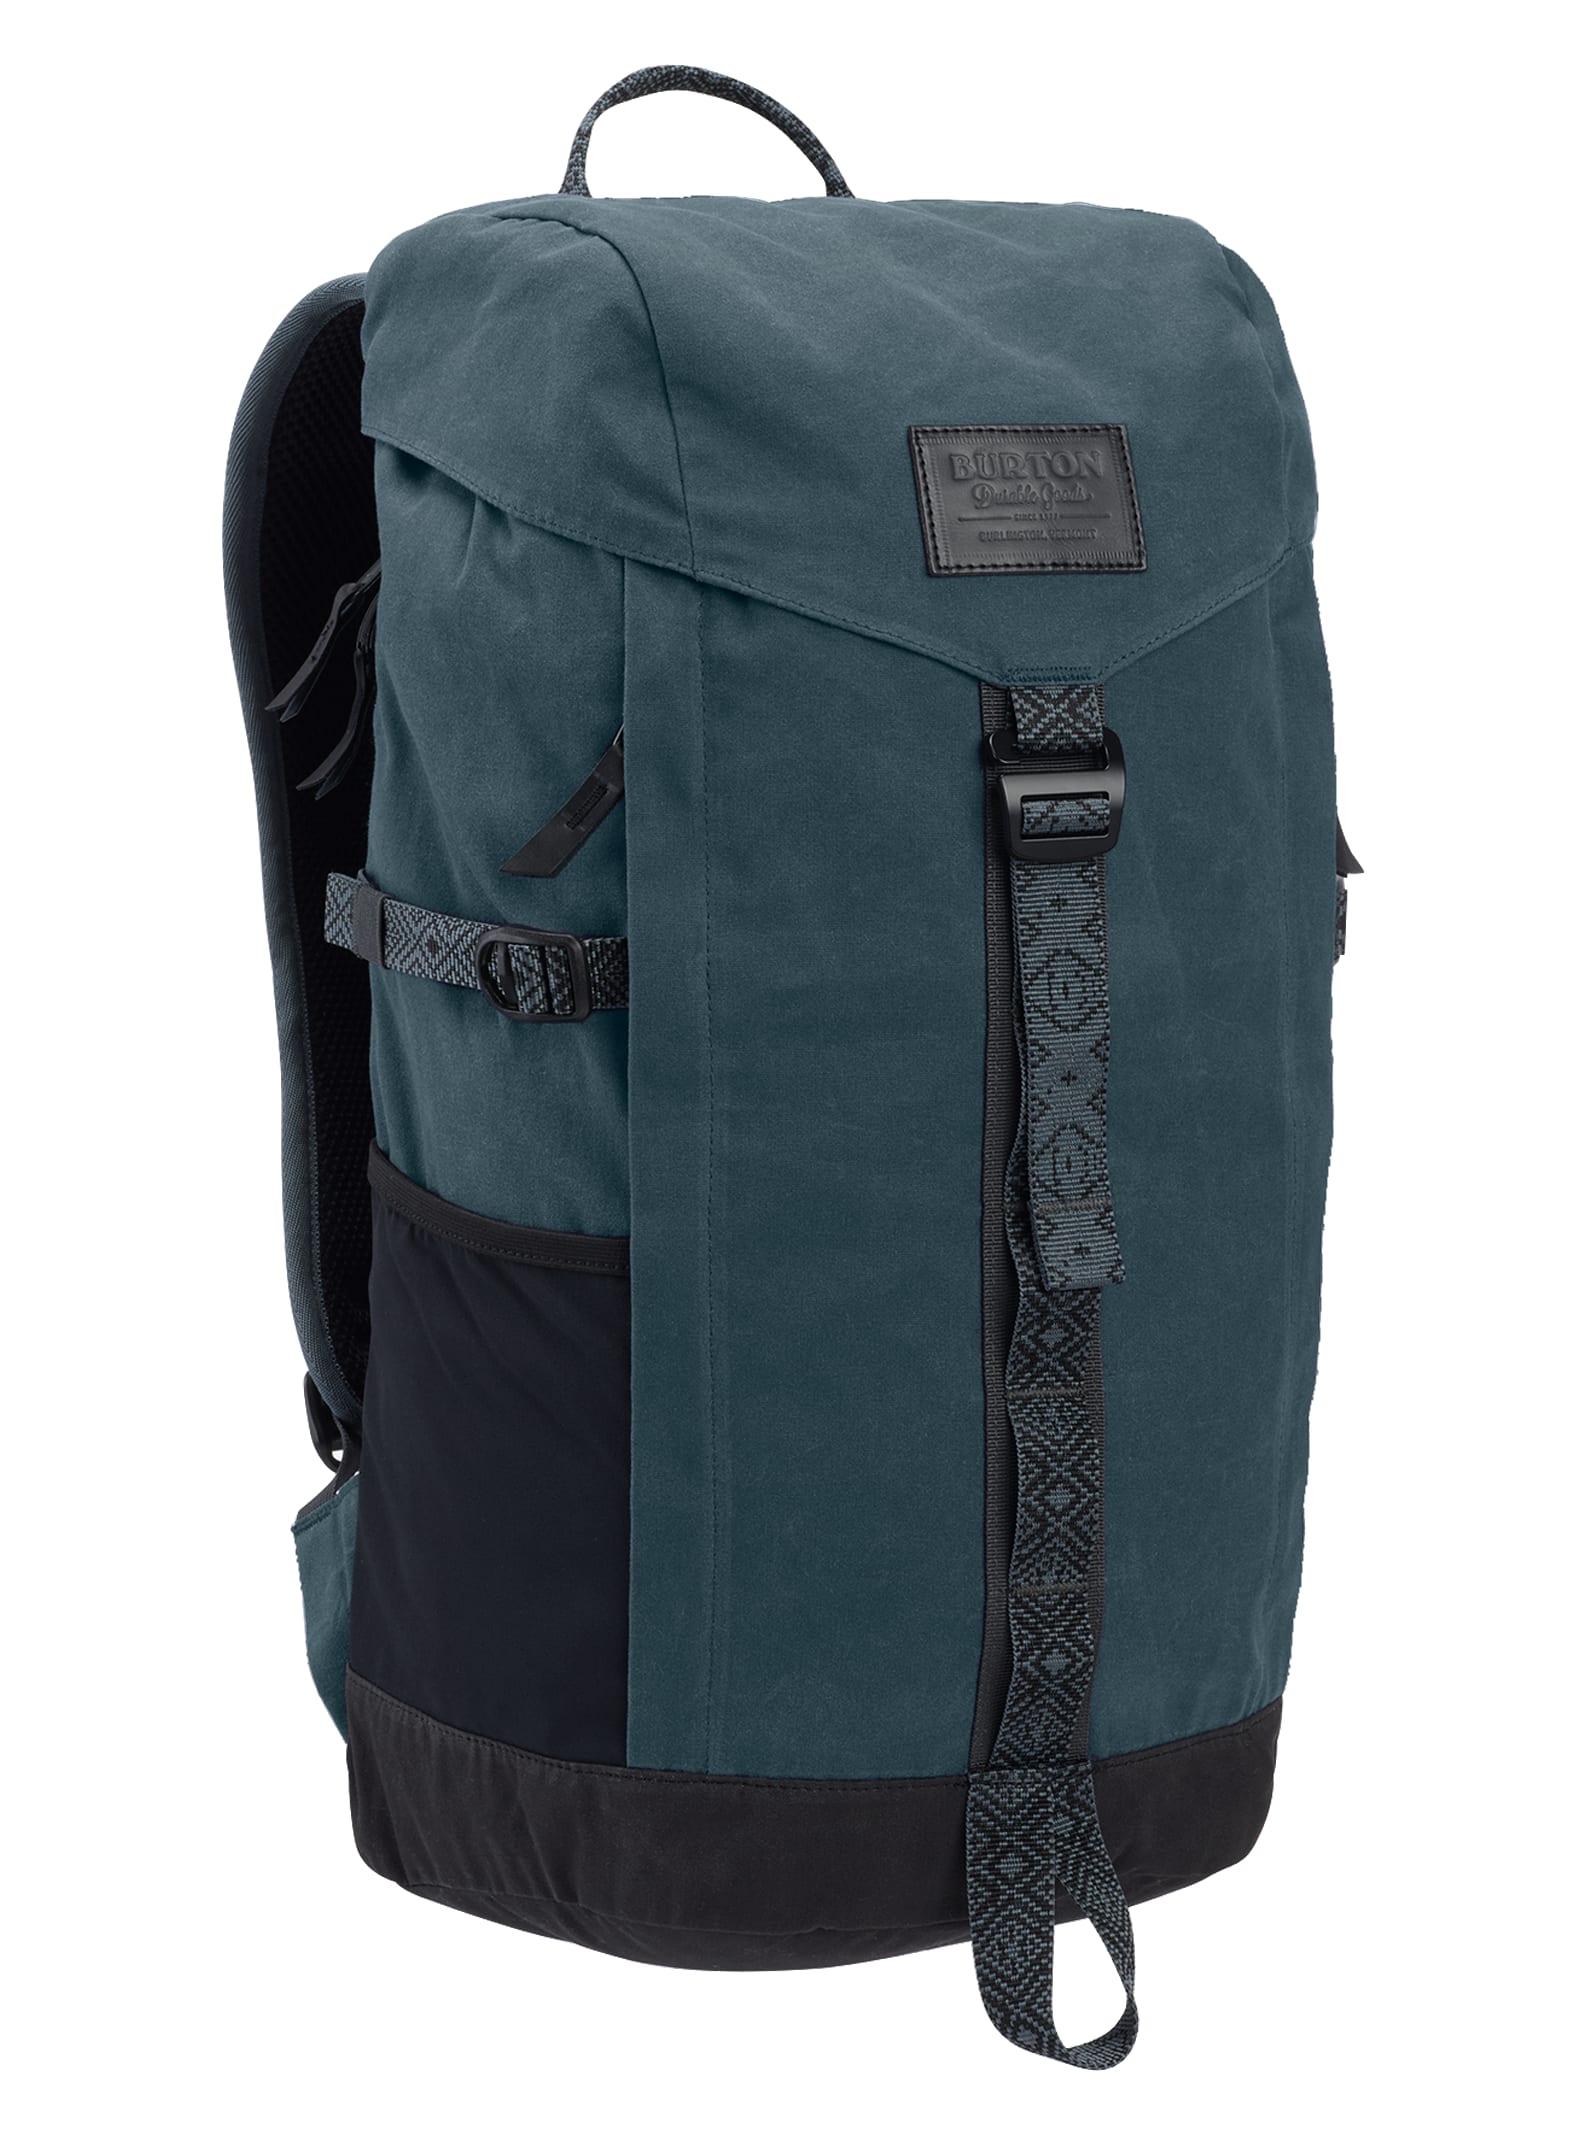 Burton Chilcoot 26L Backpack | Burton.com Spring / Summer 2019 US